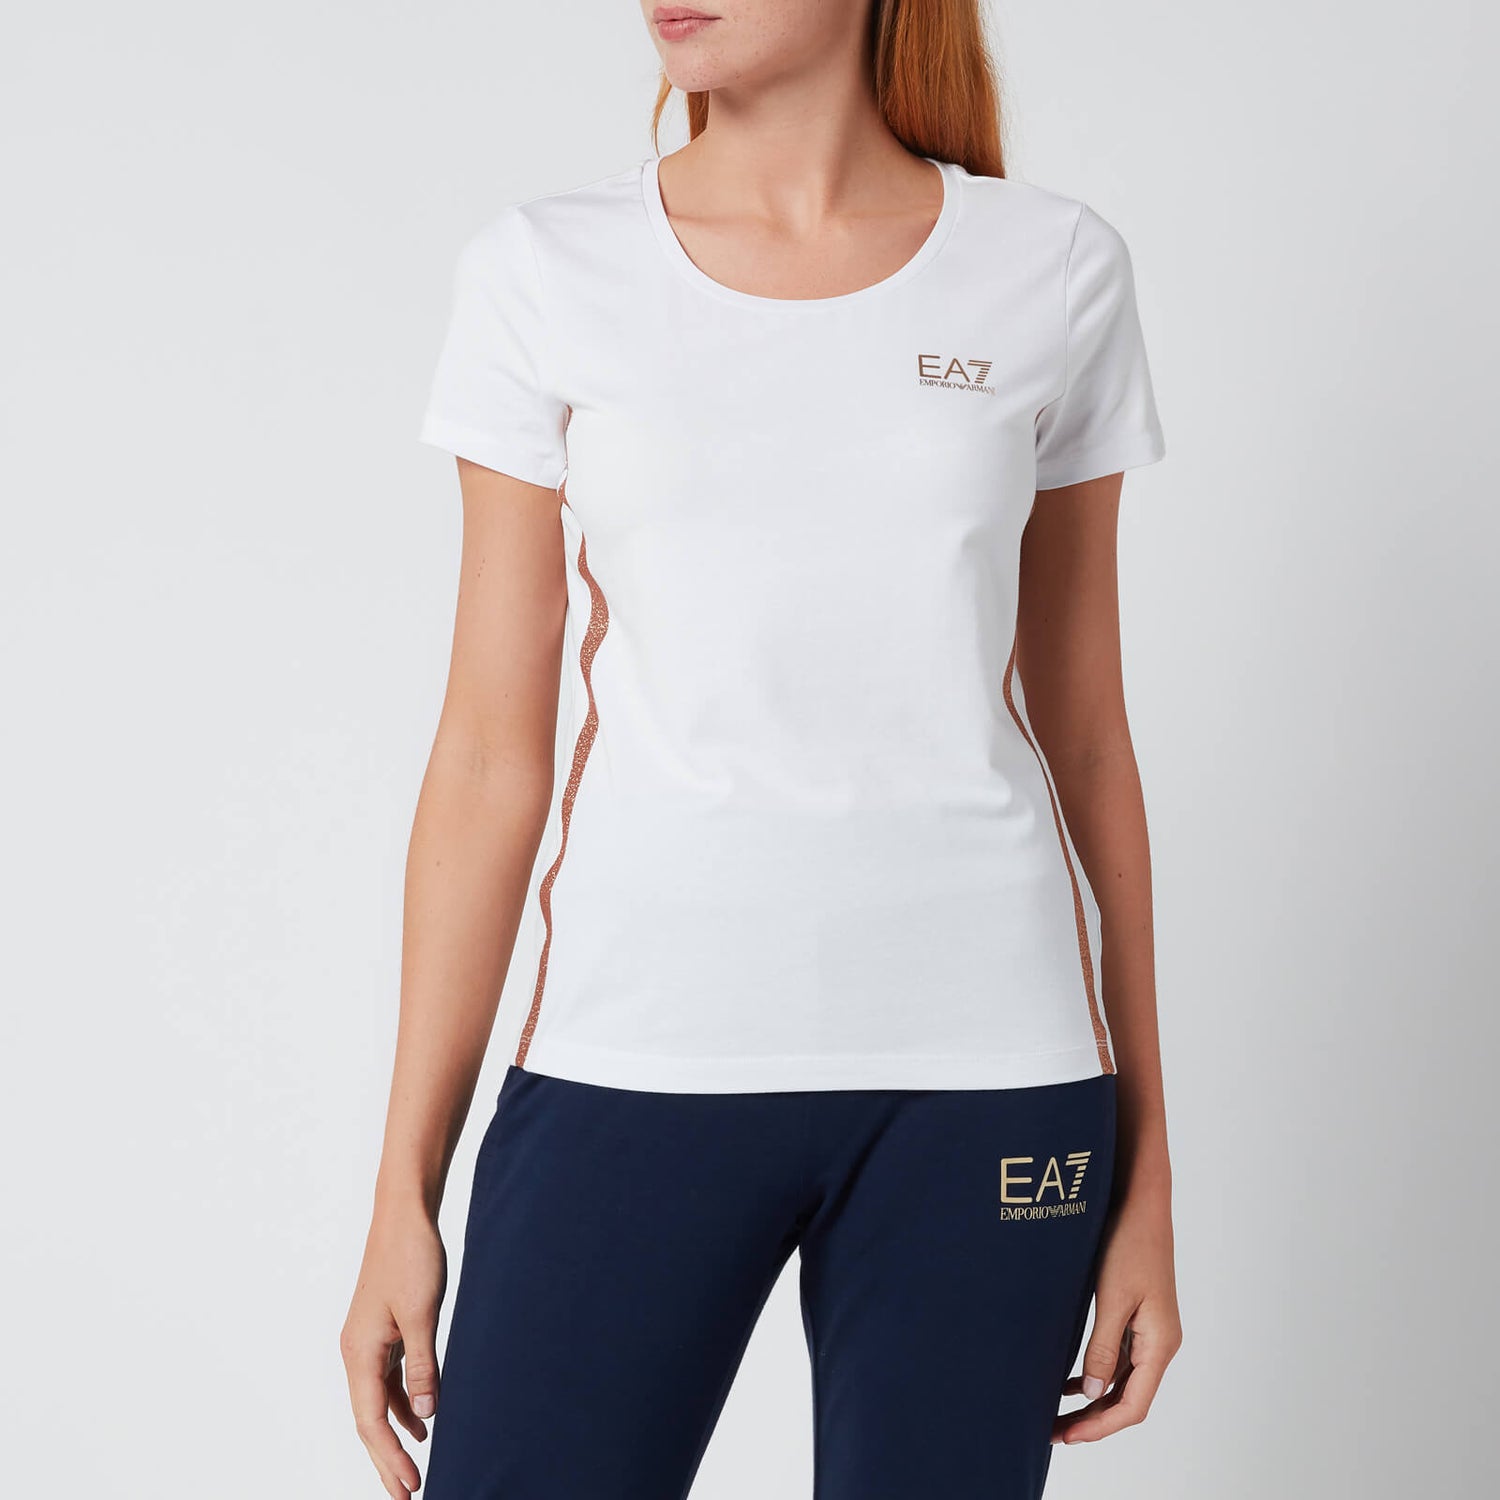 Emporio Armani EA7 Women's Train Logo Series T-Shirt - White/Lurex Bronze